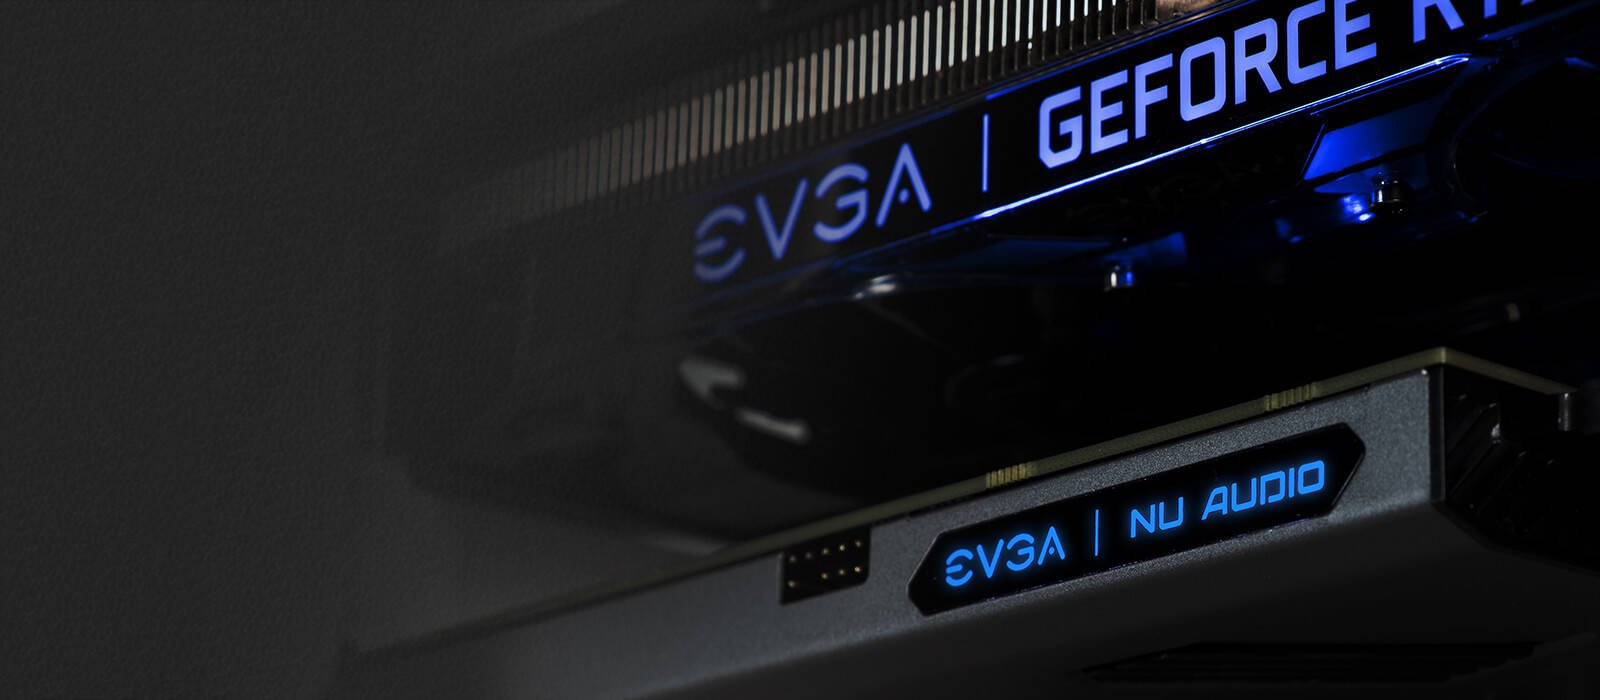 Immagine di EVGA presenta Nu Audio, una scheda audio interna che promette una resa fedele e grande qualità